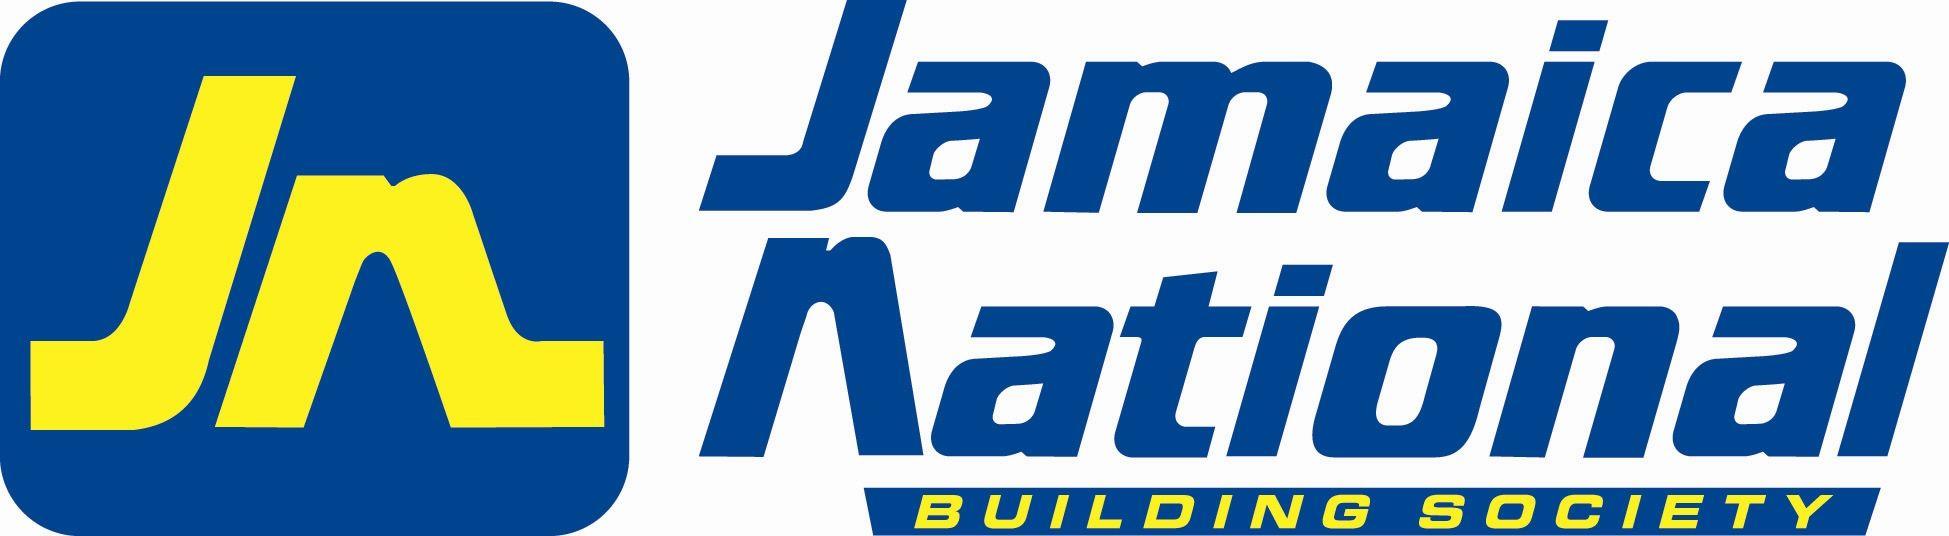 Jamaican Banking Logo - Jamaica Cancer Society